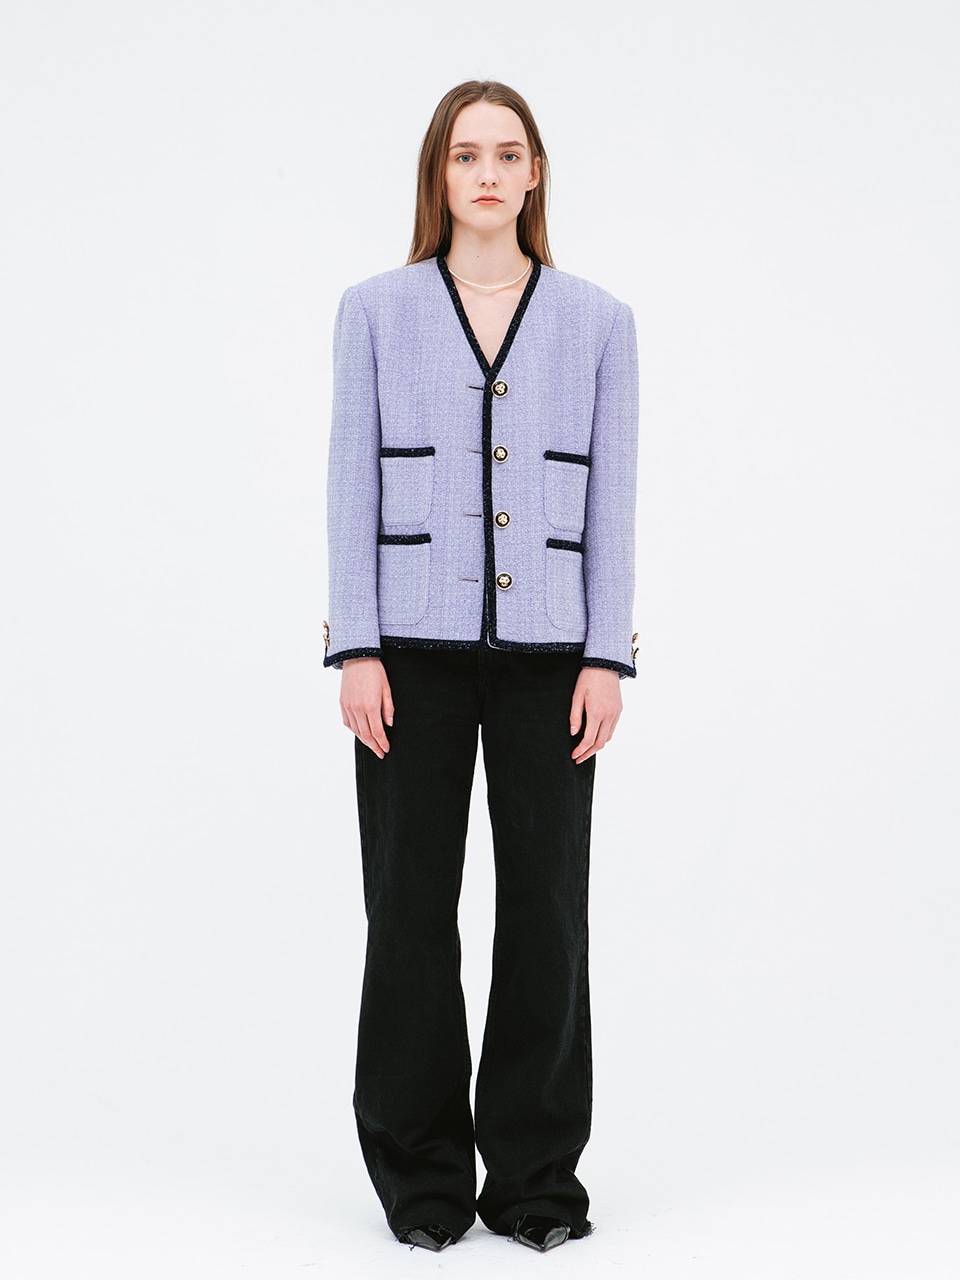 Diana Tweed Jacket in Lilac